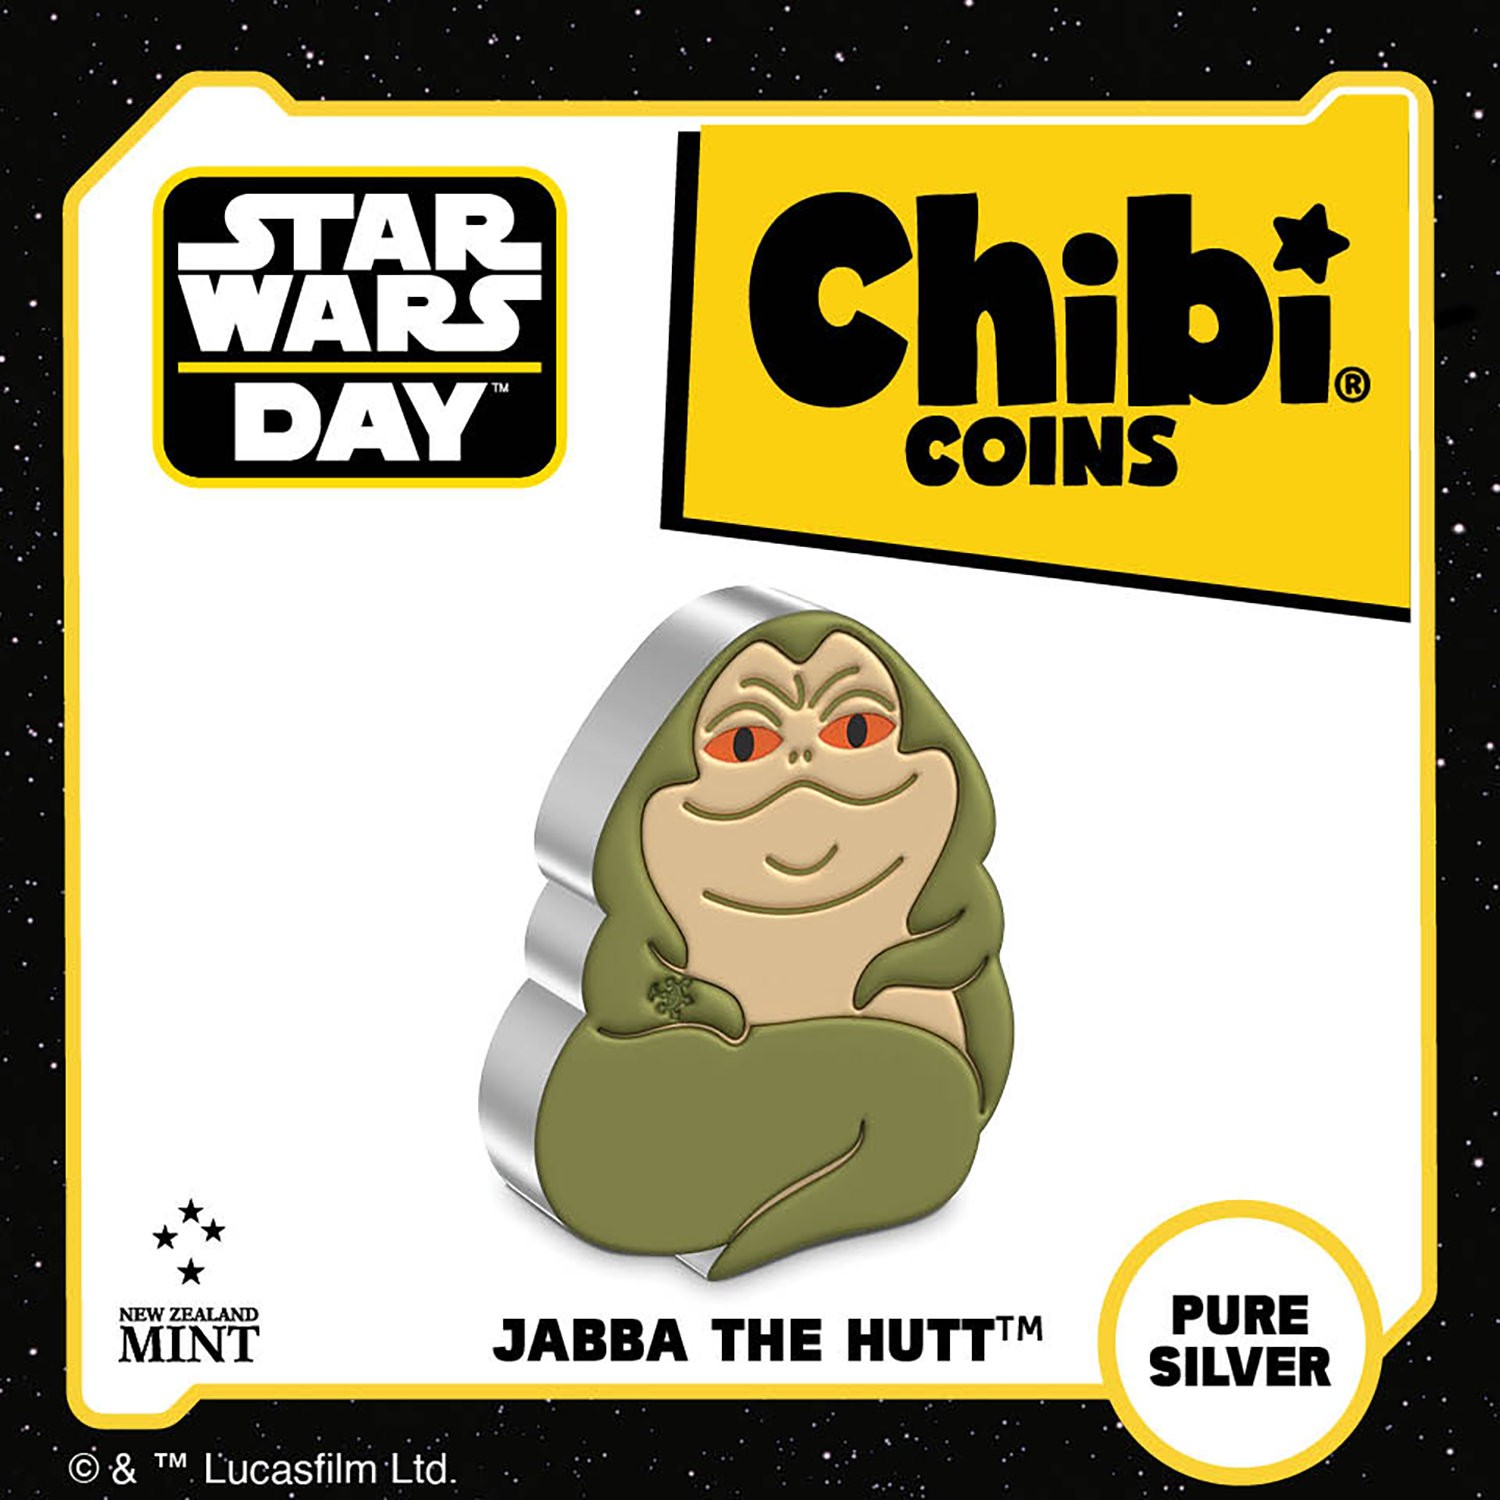 Jabba the Hutt 2oz Silver Coin- Prototype Shown